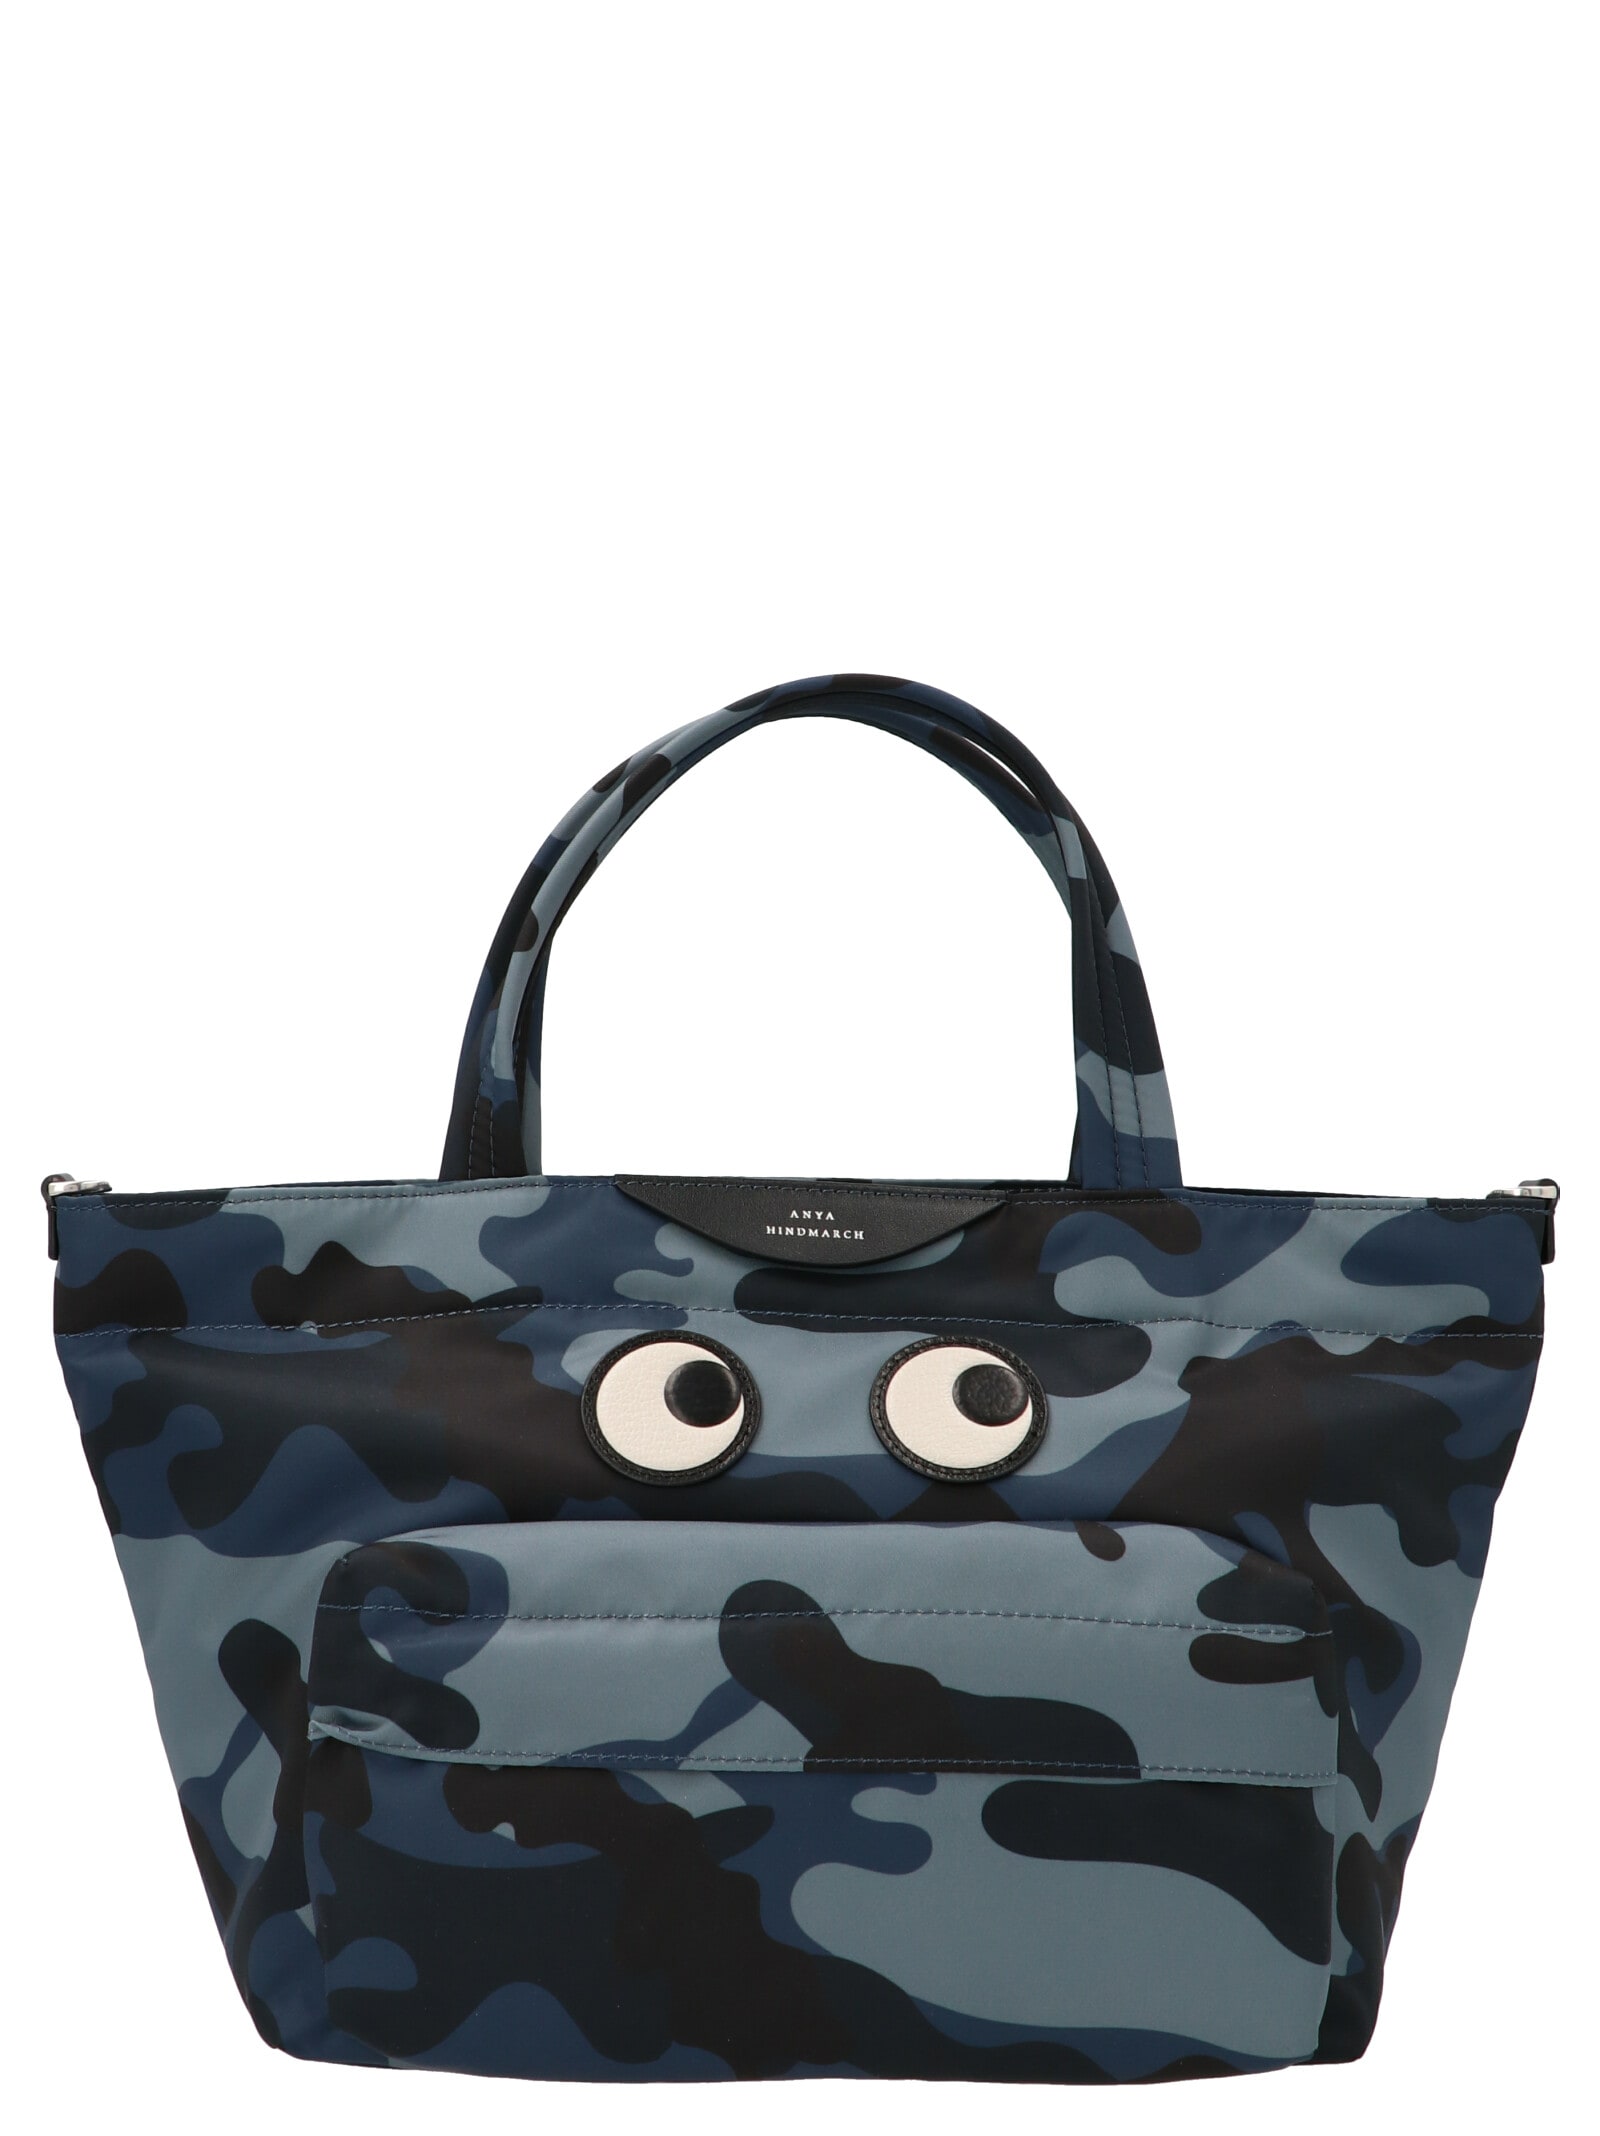 Anya Hindmarch eyes Mini Shopping Bag